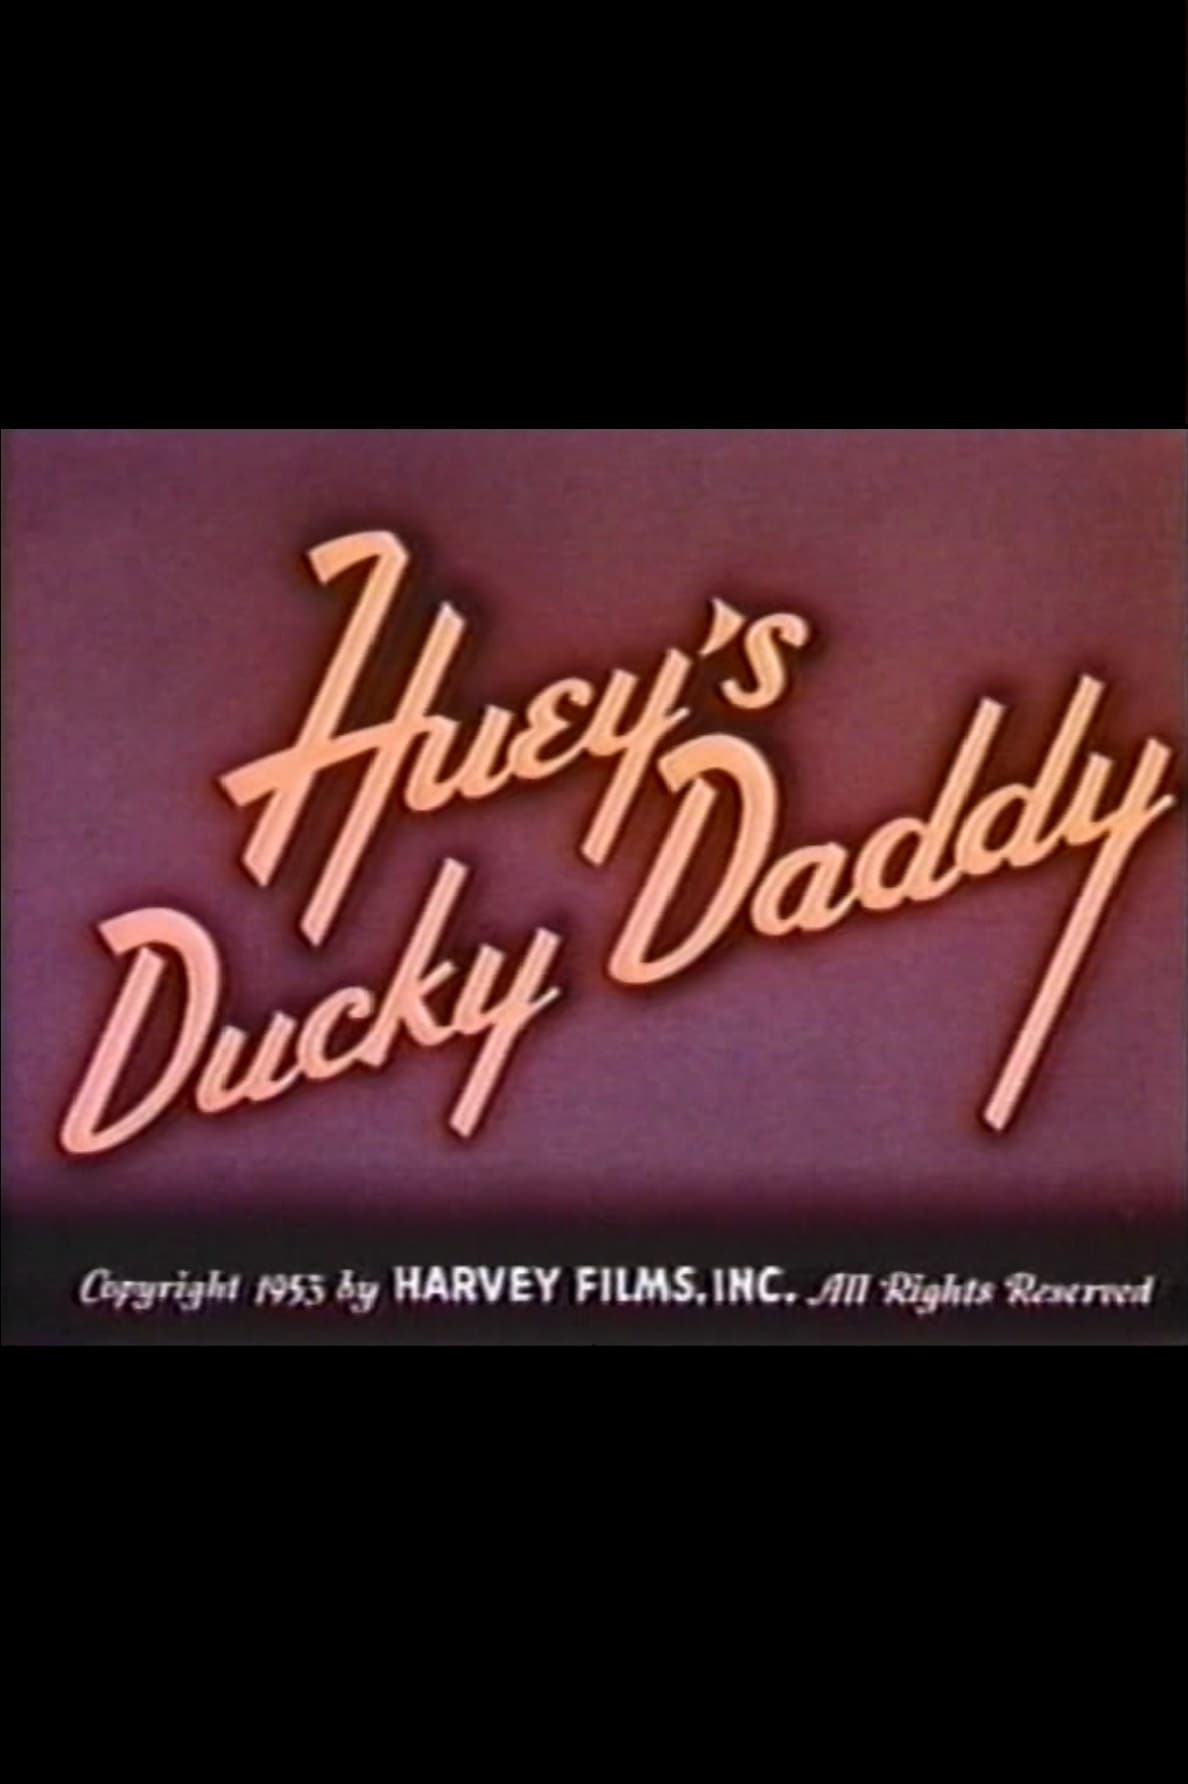 Huey's Ducky Daddy